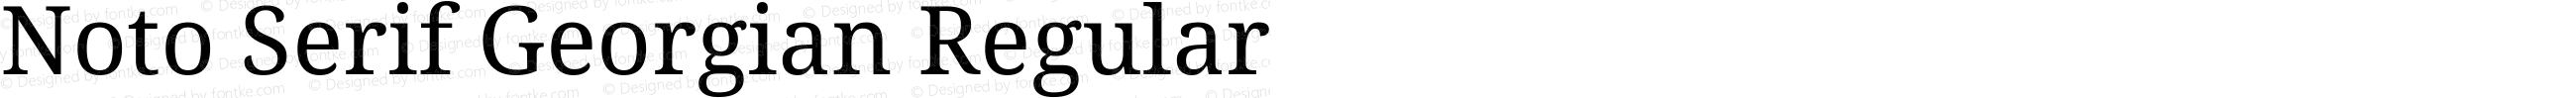 Noto Serif Georgian Regular